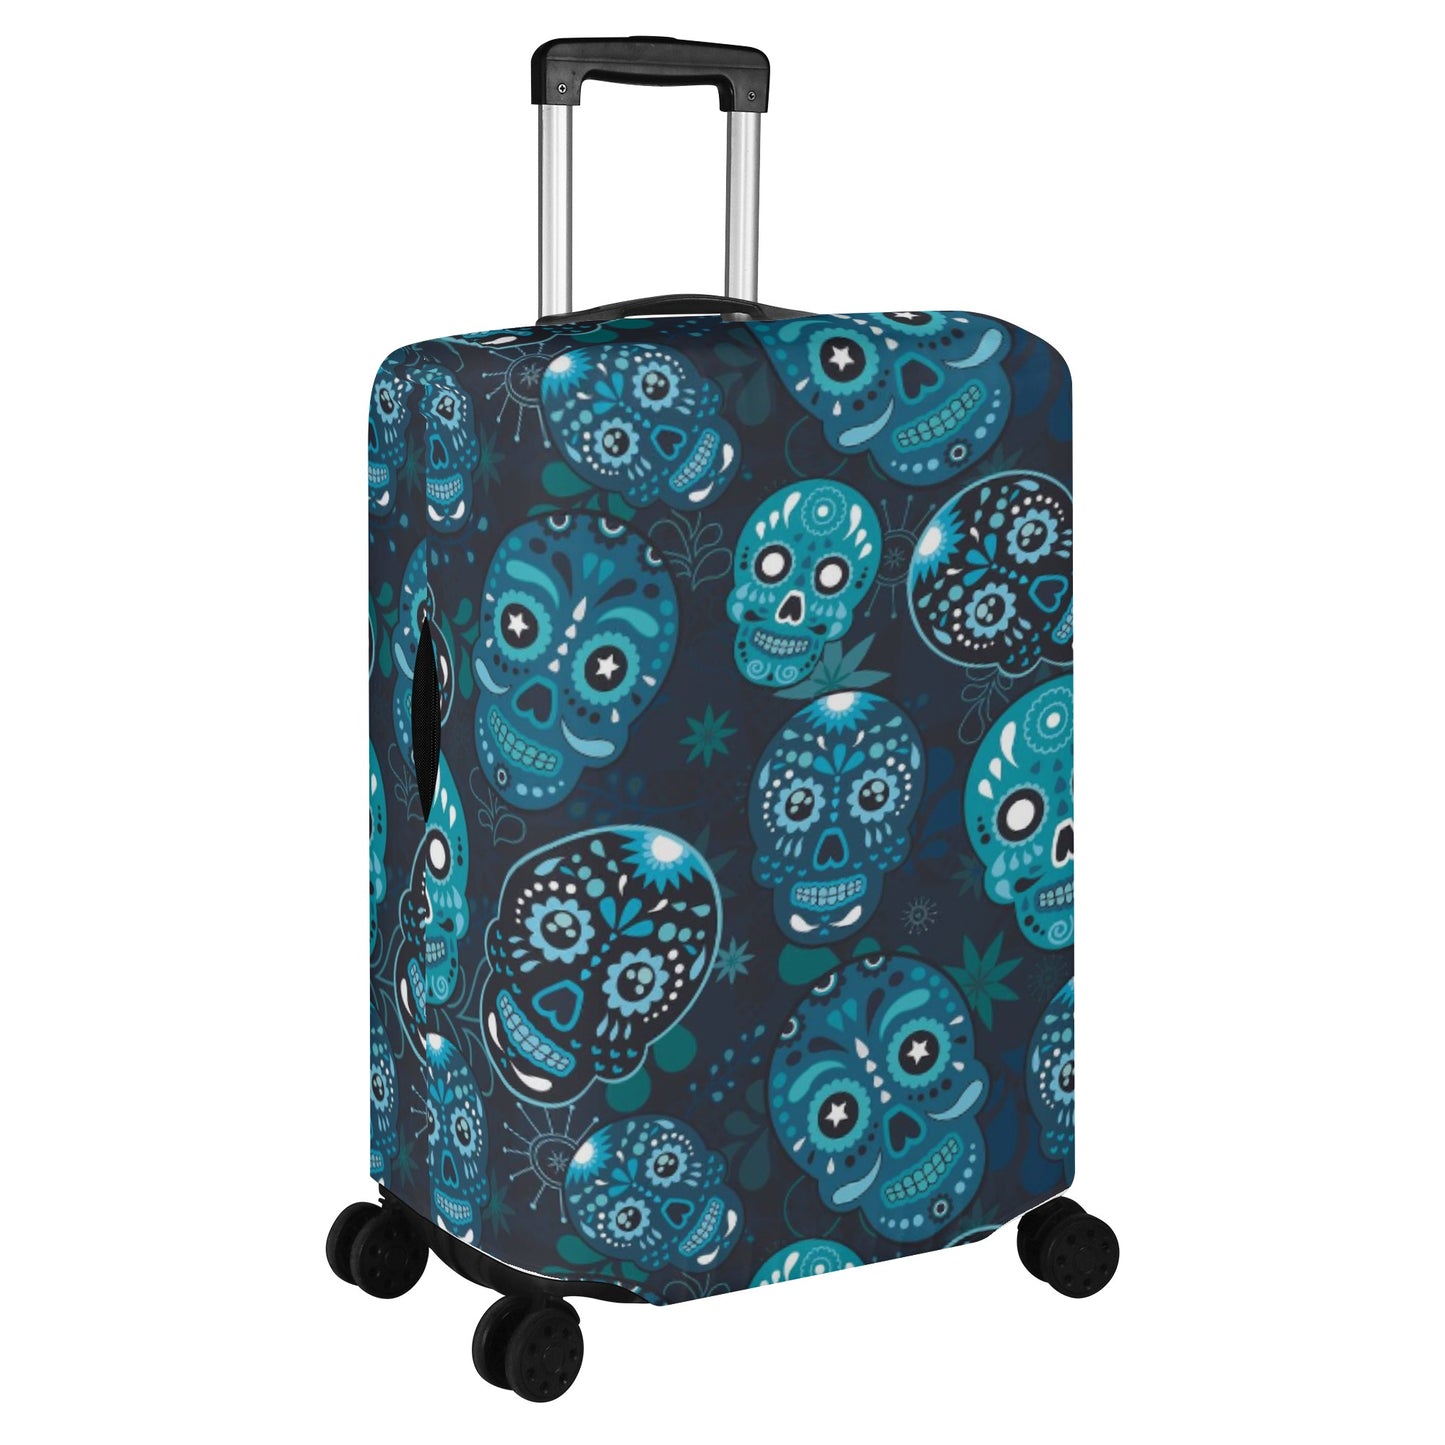 Skeleton gothic sugar skull Polyester Luggage Cover